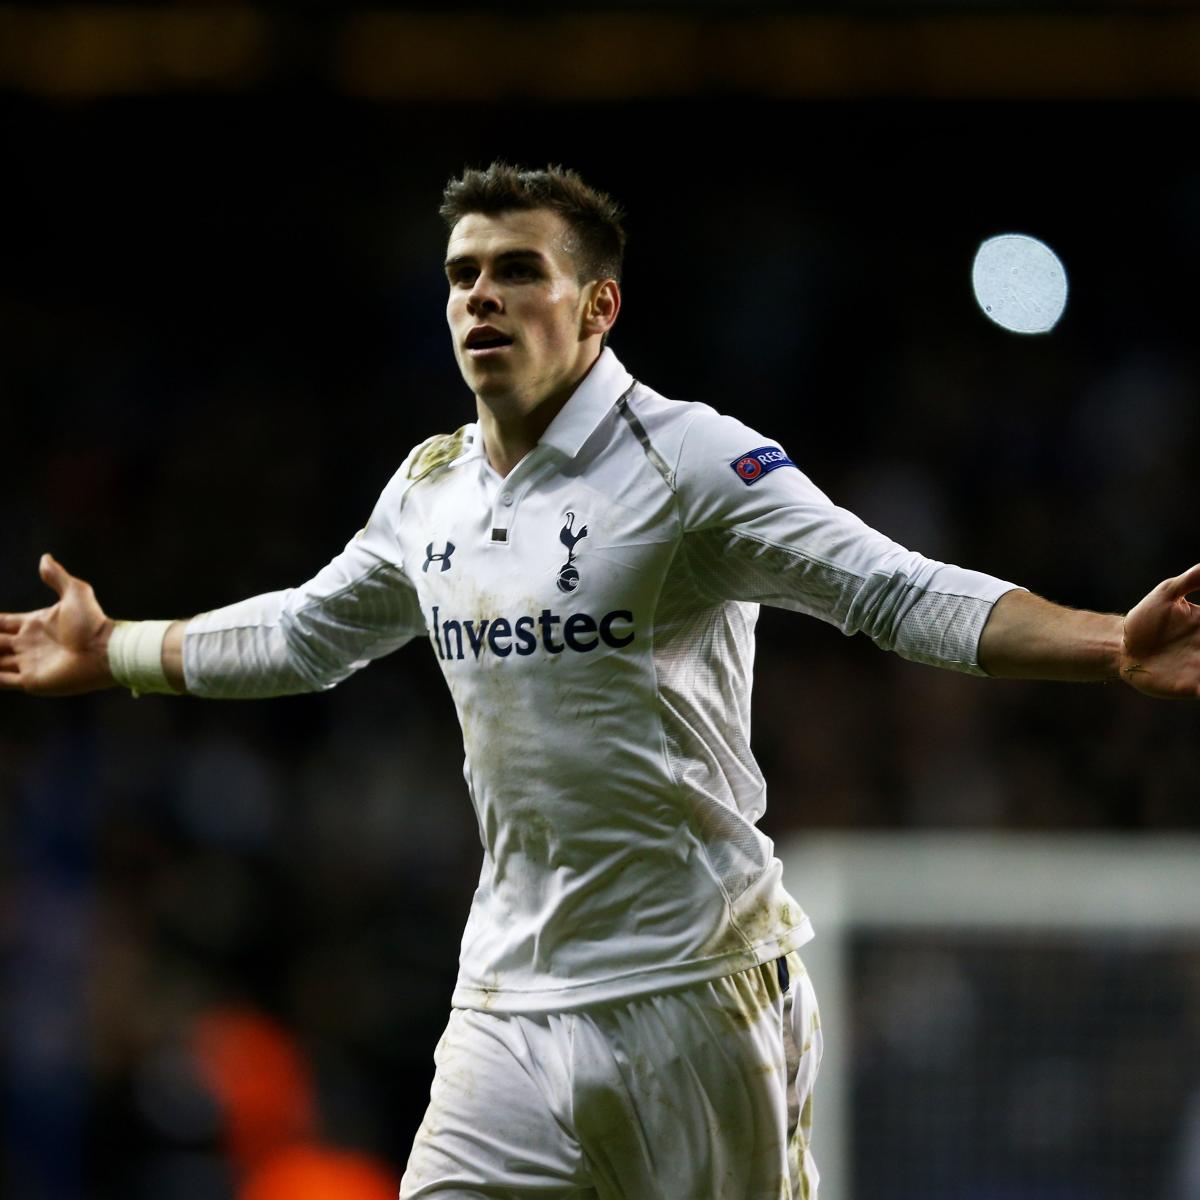 Tottenham's Gareth Bale a worthy winner of double PFA award - BBC